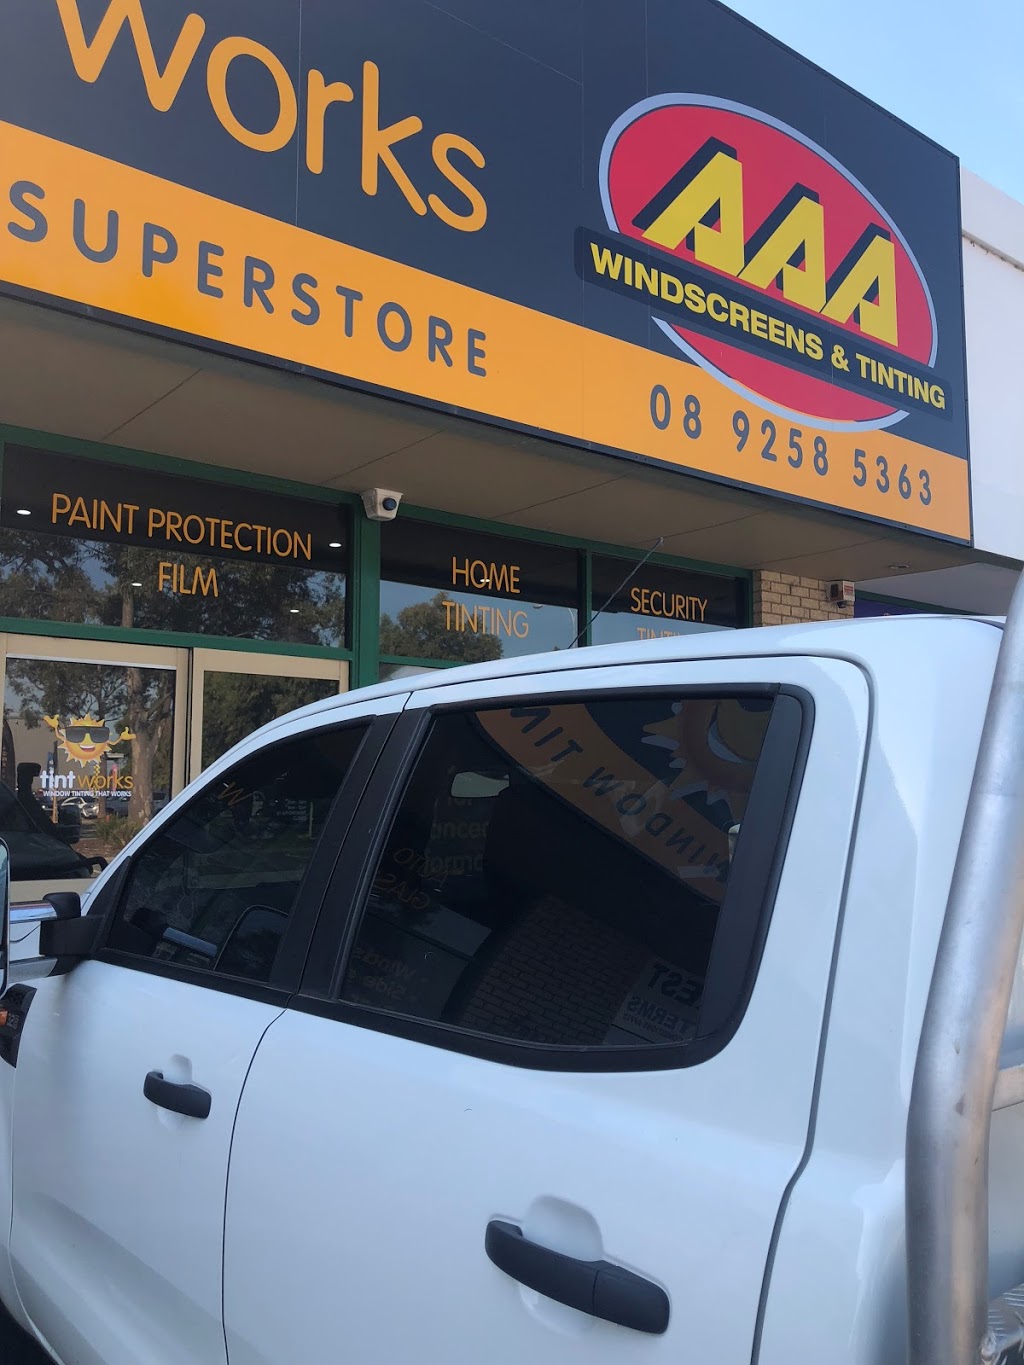 AAA Windscreens | car repair | 3/1264 Albany Hwy, Cannington WA 6107, Australia | 0892585363 OR +61 8 9258 5363